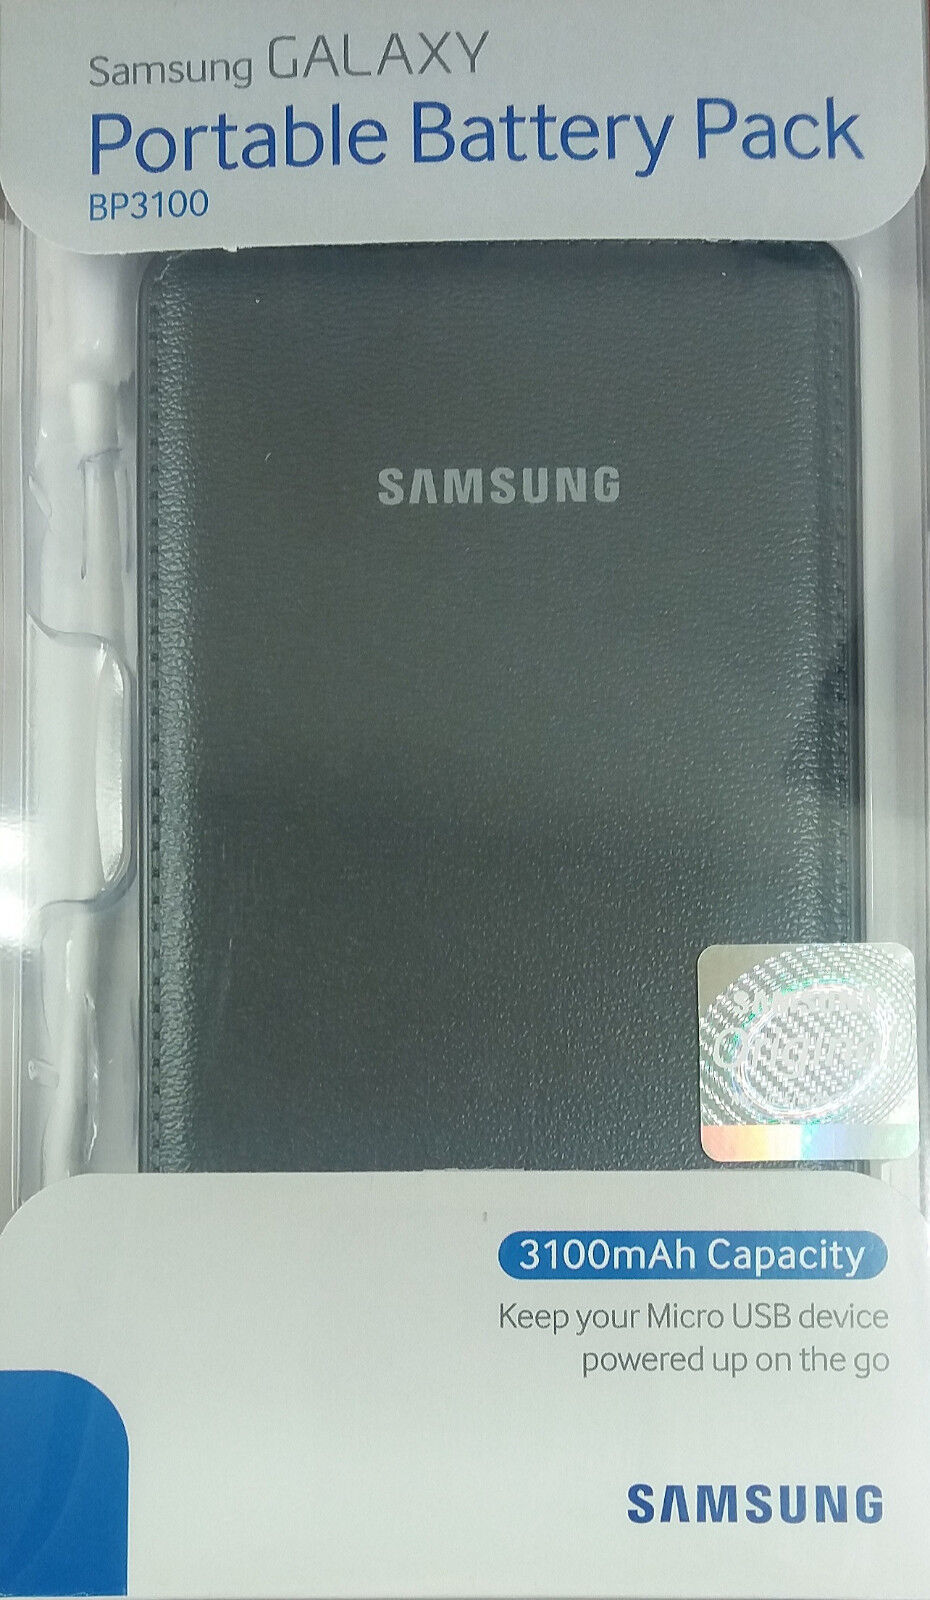 OEM Samsung Galaxy Portable Power Battery Pack 3100mAh BP3100 Black Note 4 S6 S7 - $65.99